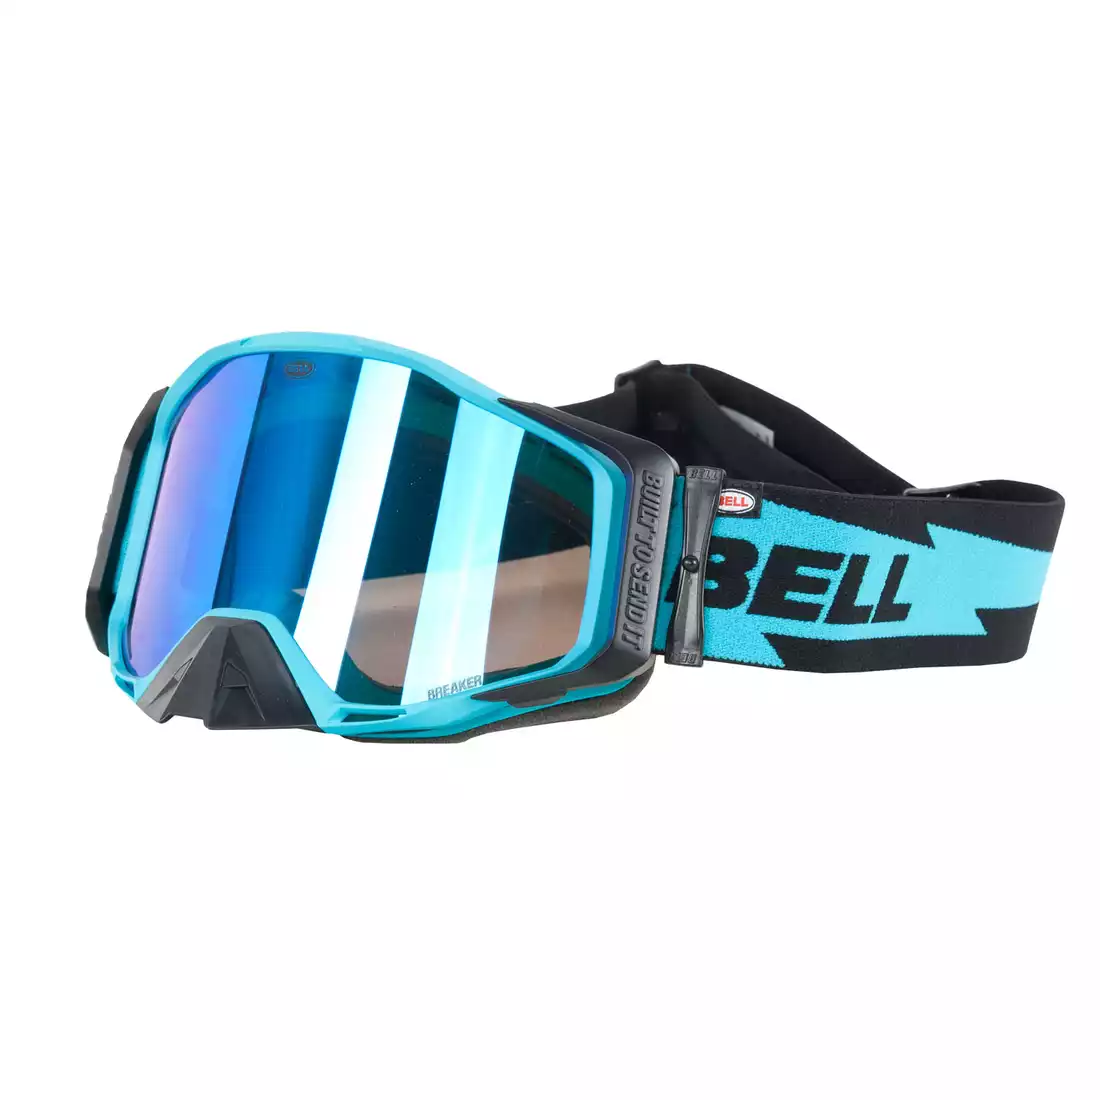 BELL Fahrrad-Brille BREAKER Bolt Matte Black/Blue (REFLEX REVO BLUE MIRROR - SMOKE TINT) BEL-7122856